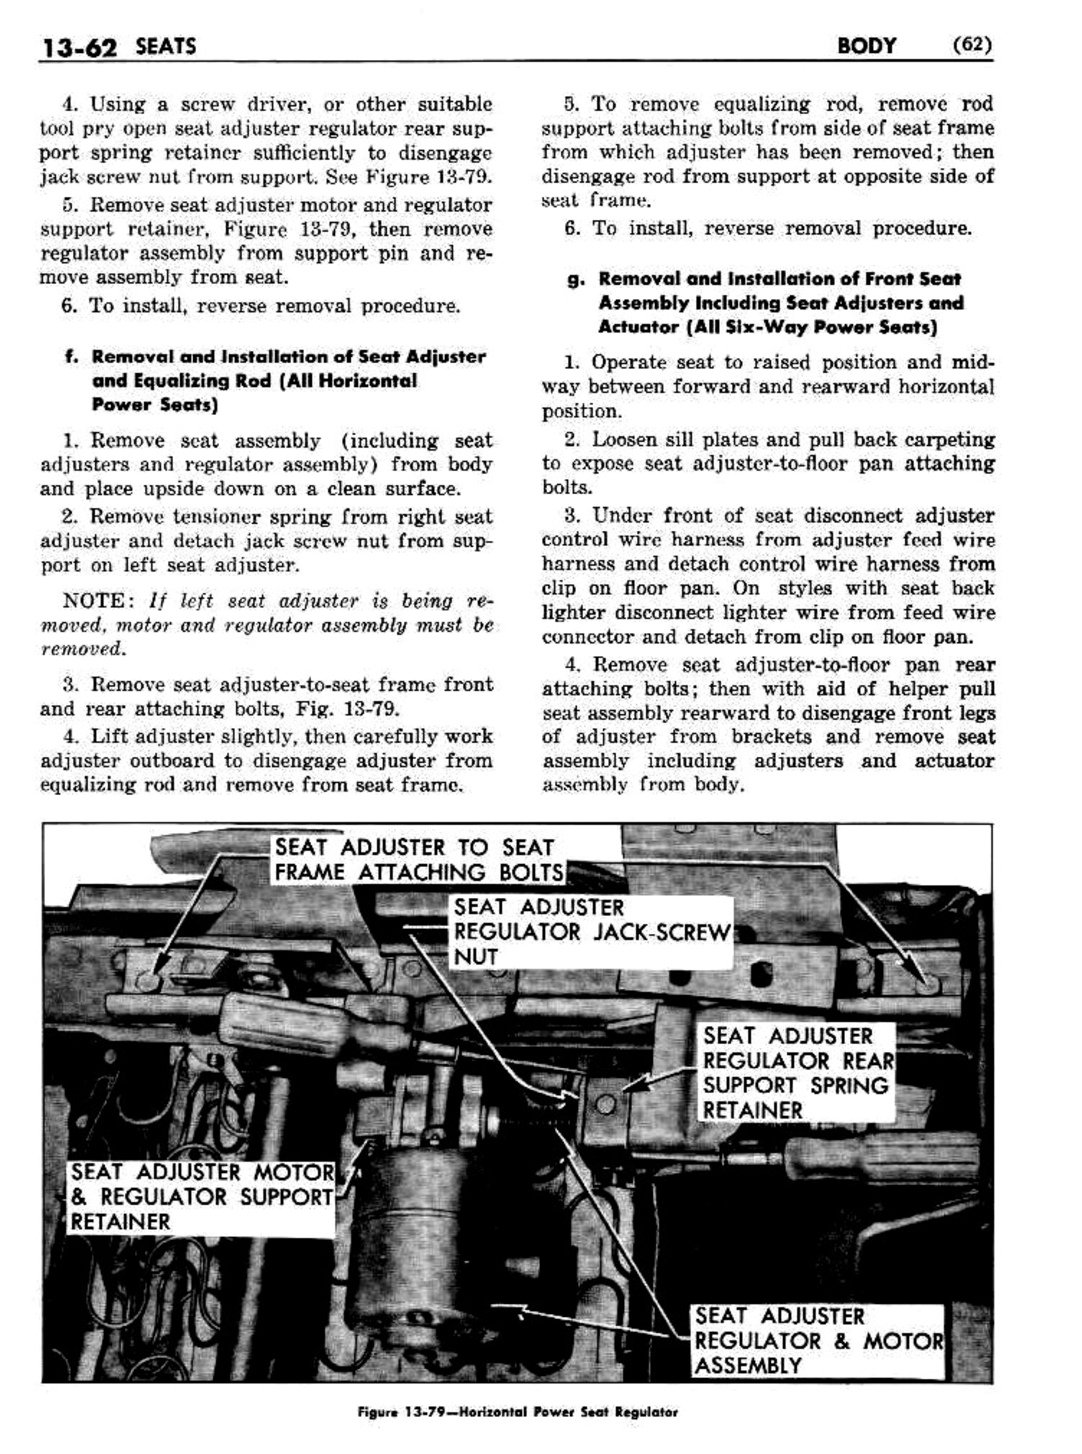 n_1958 Buick Body Service Manual-063-063.jpg